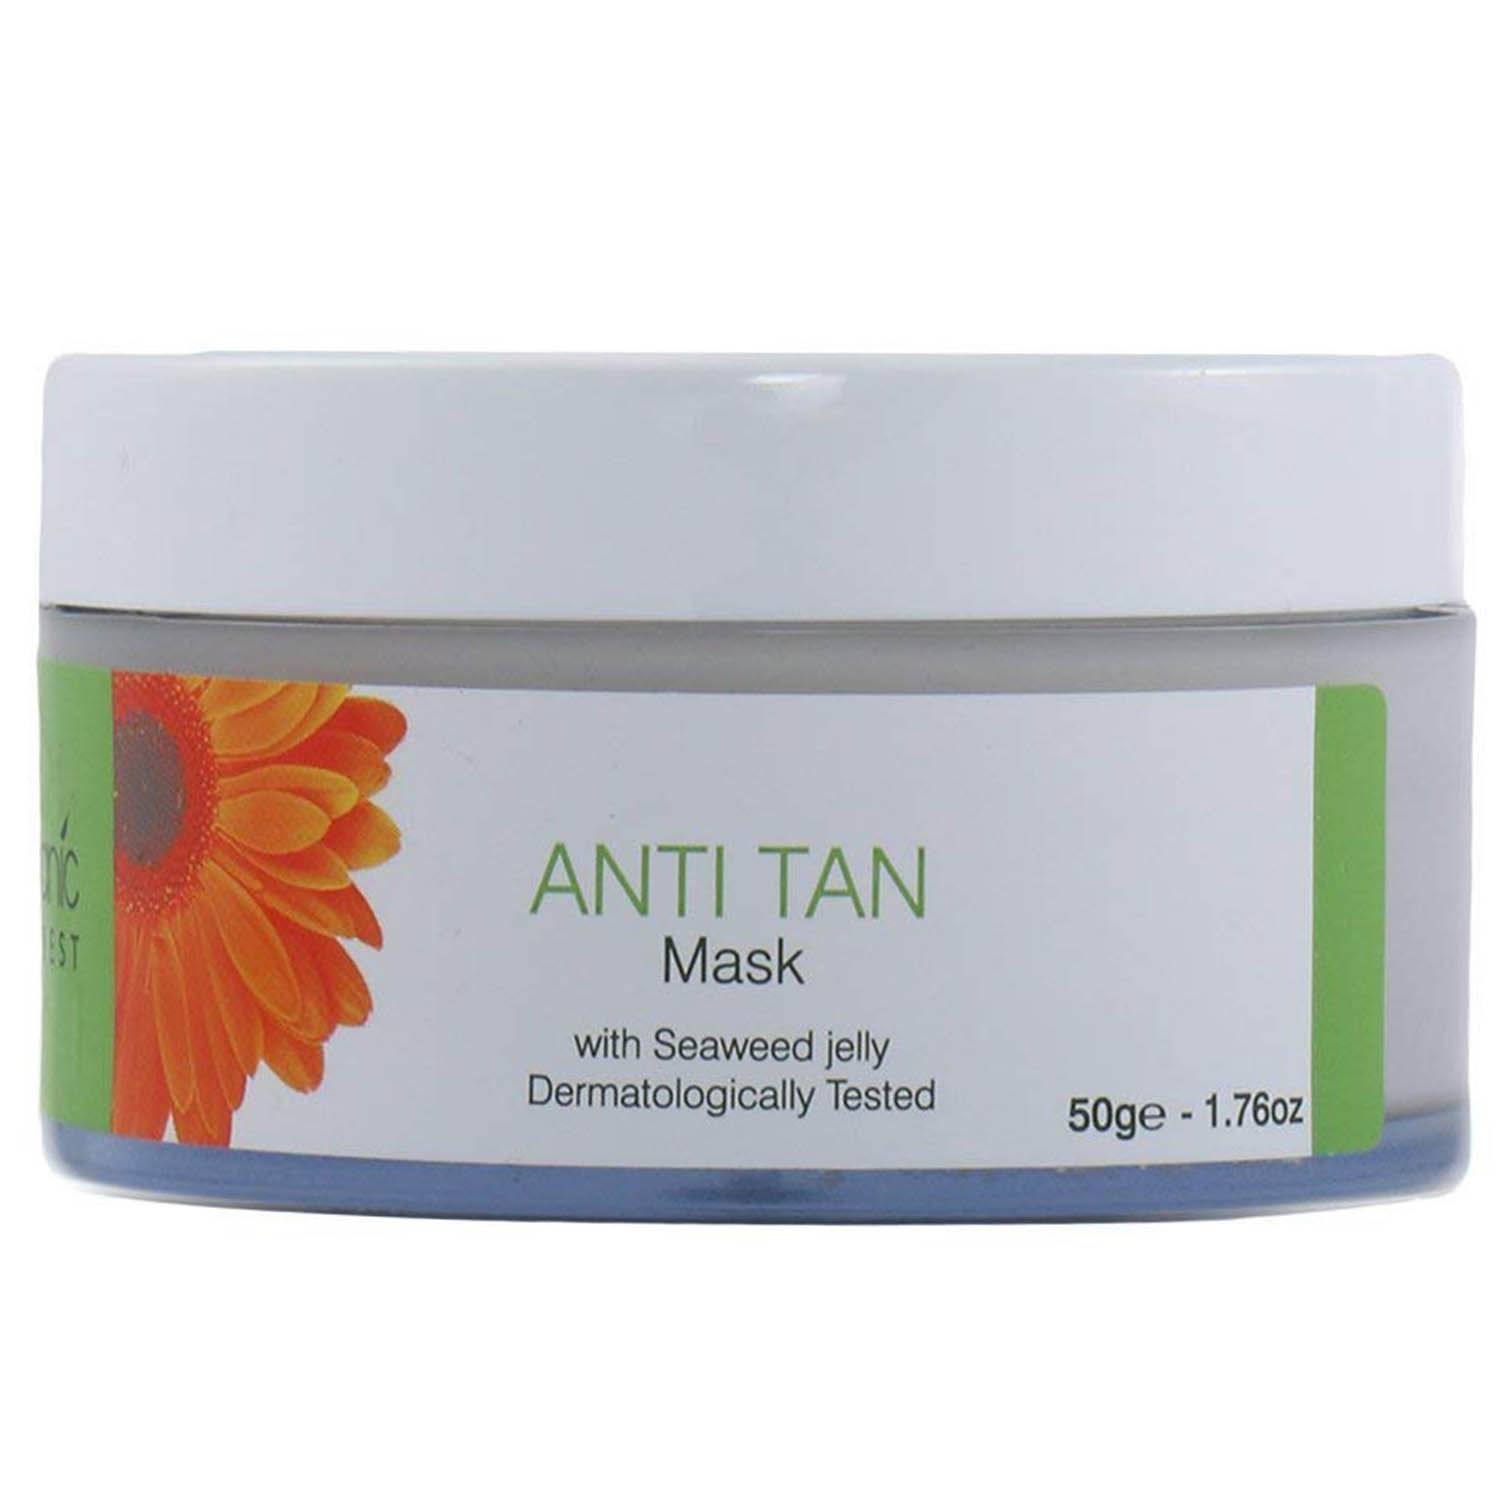 Organic Harvest Anti Tan Mask, 50 gm, Pack of 1 